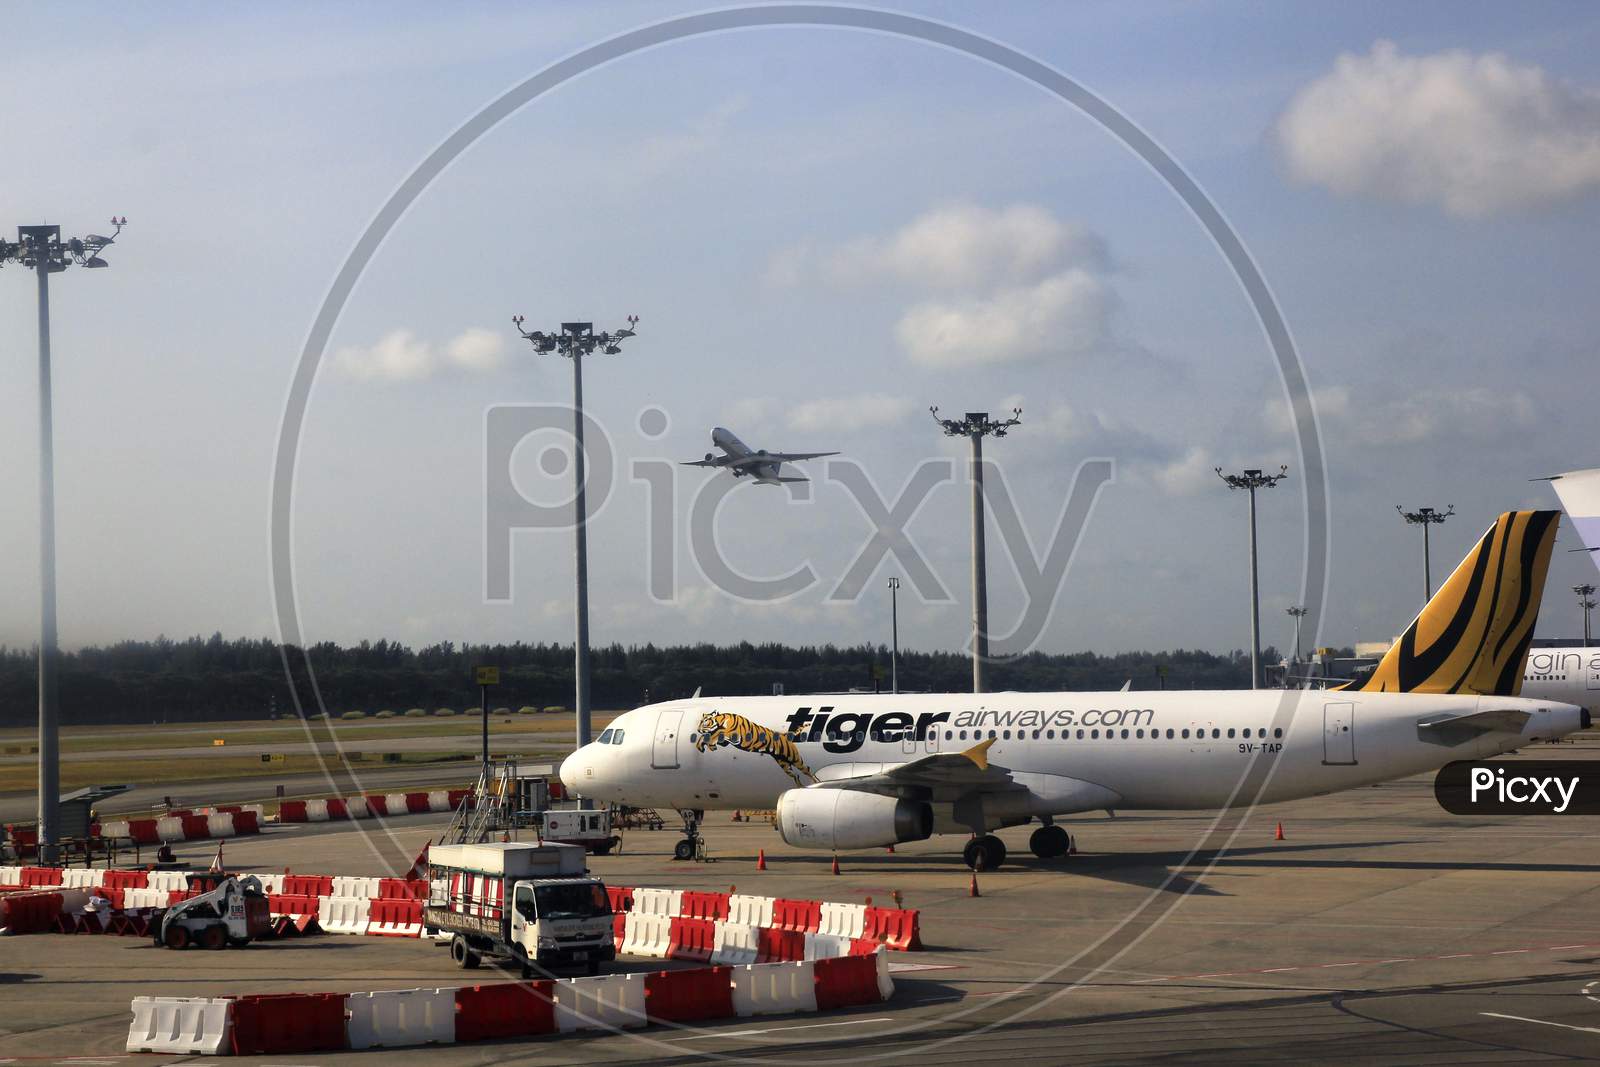 Airbus Tiger Airways aircraft operating as Tigerair are parked at Changi International Airport